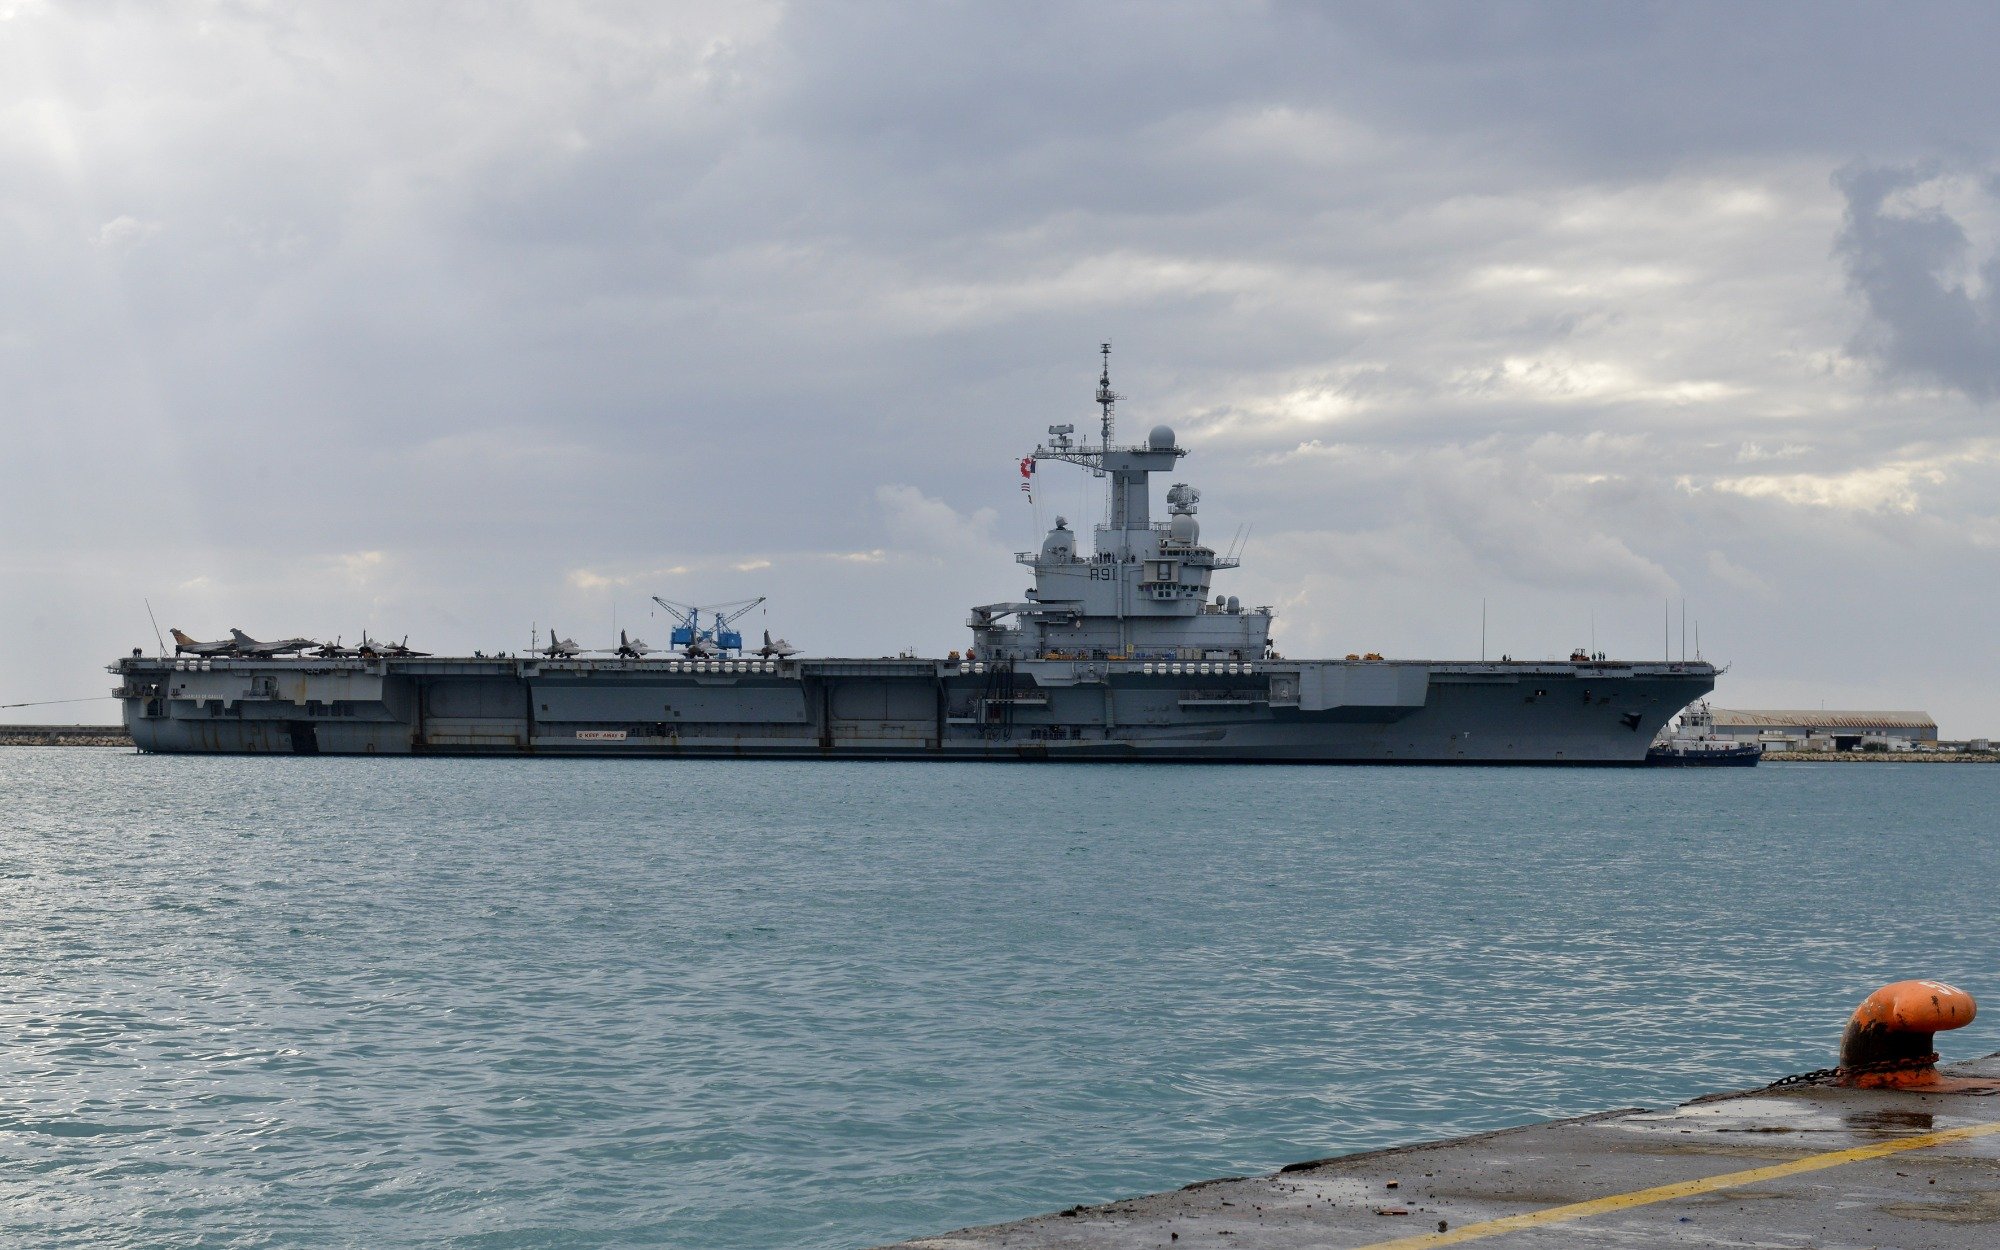 France’s Charles de Gaulle: A Nuclear-Powered Naval Powerhouse